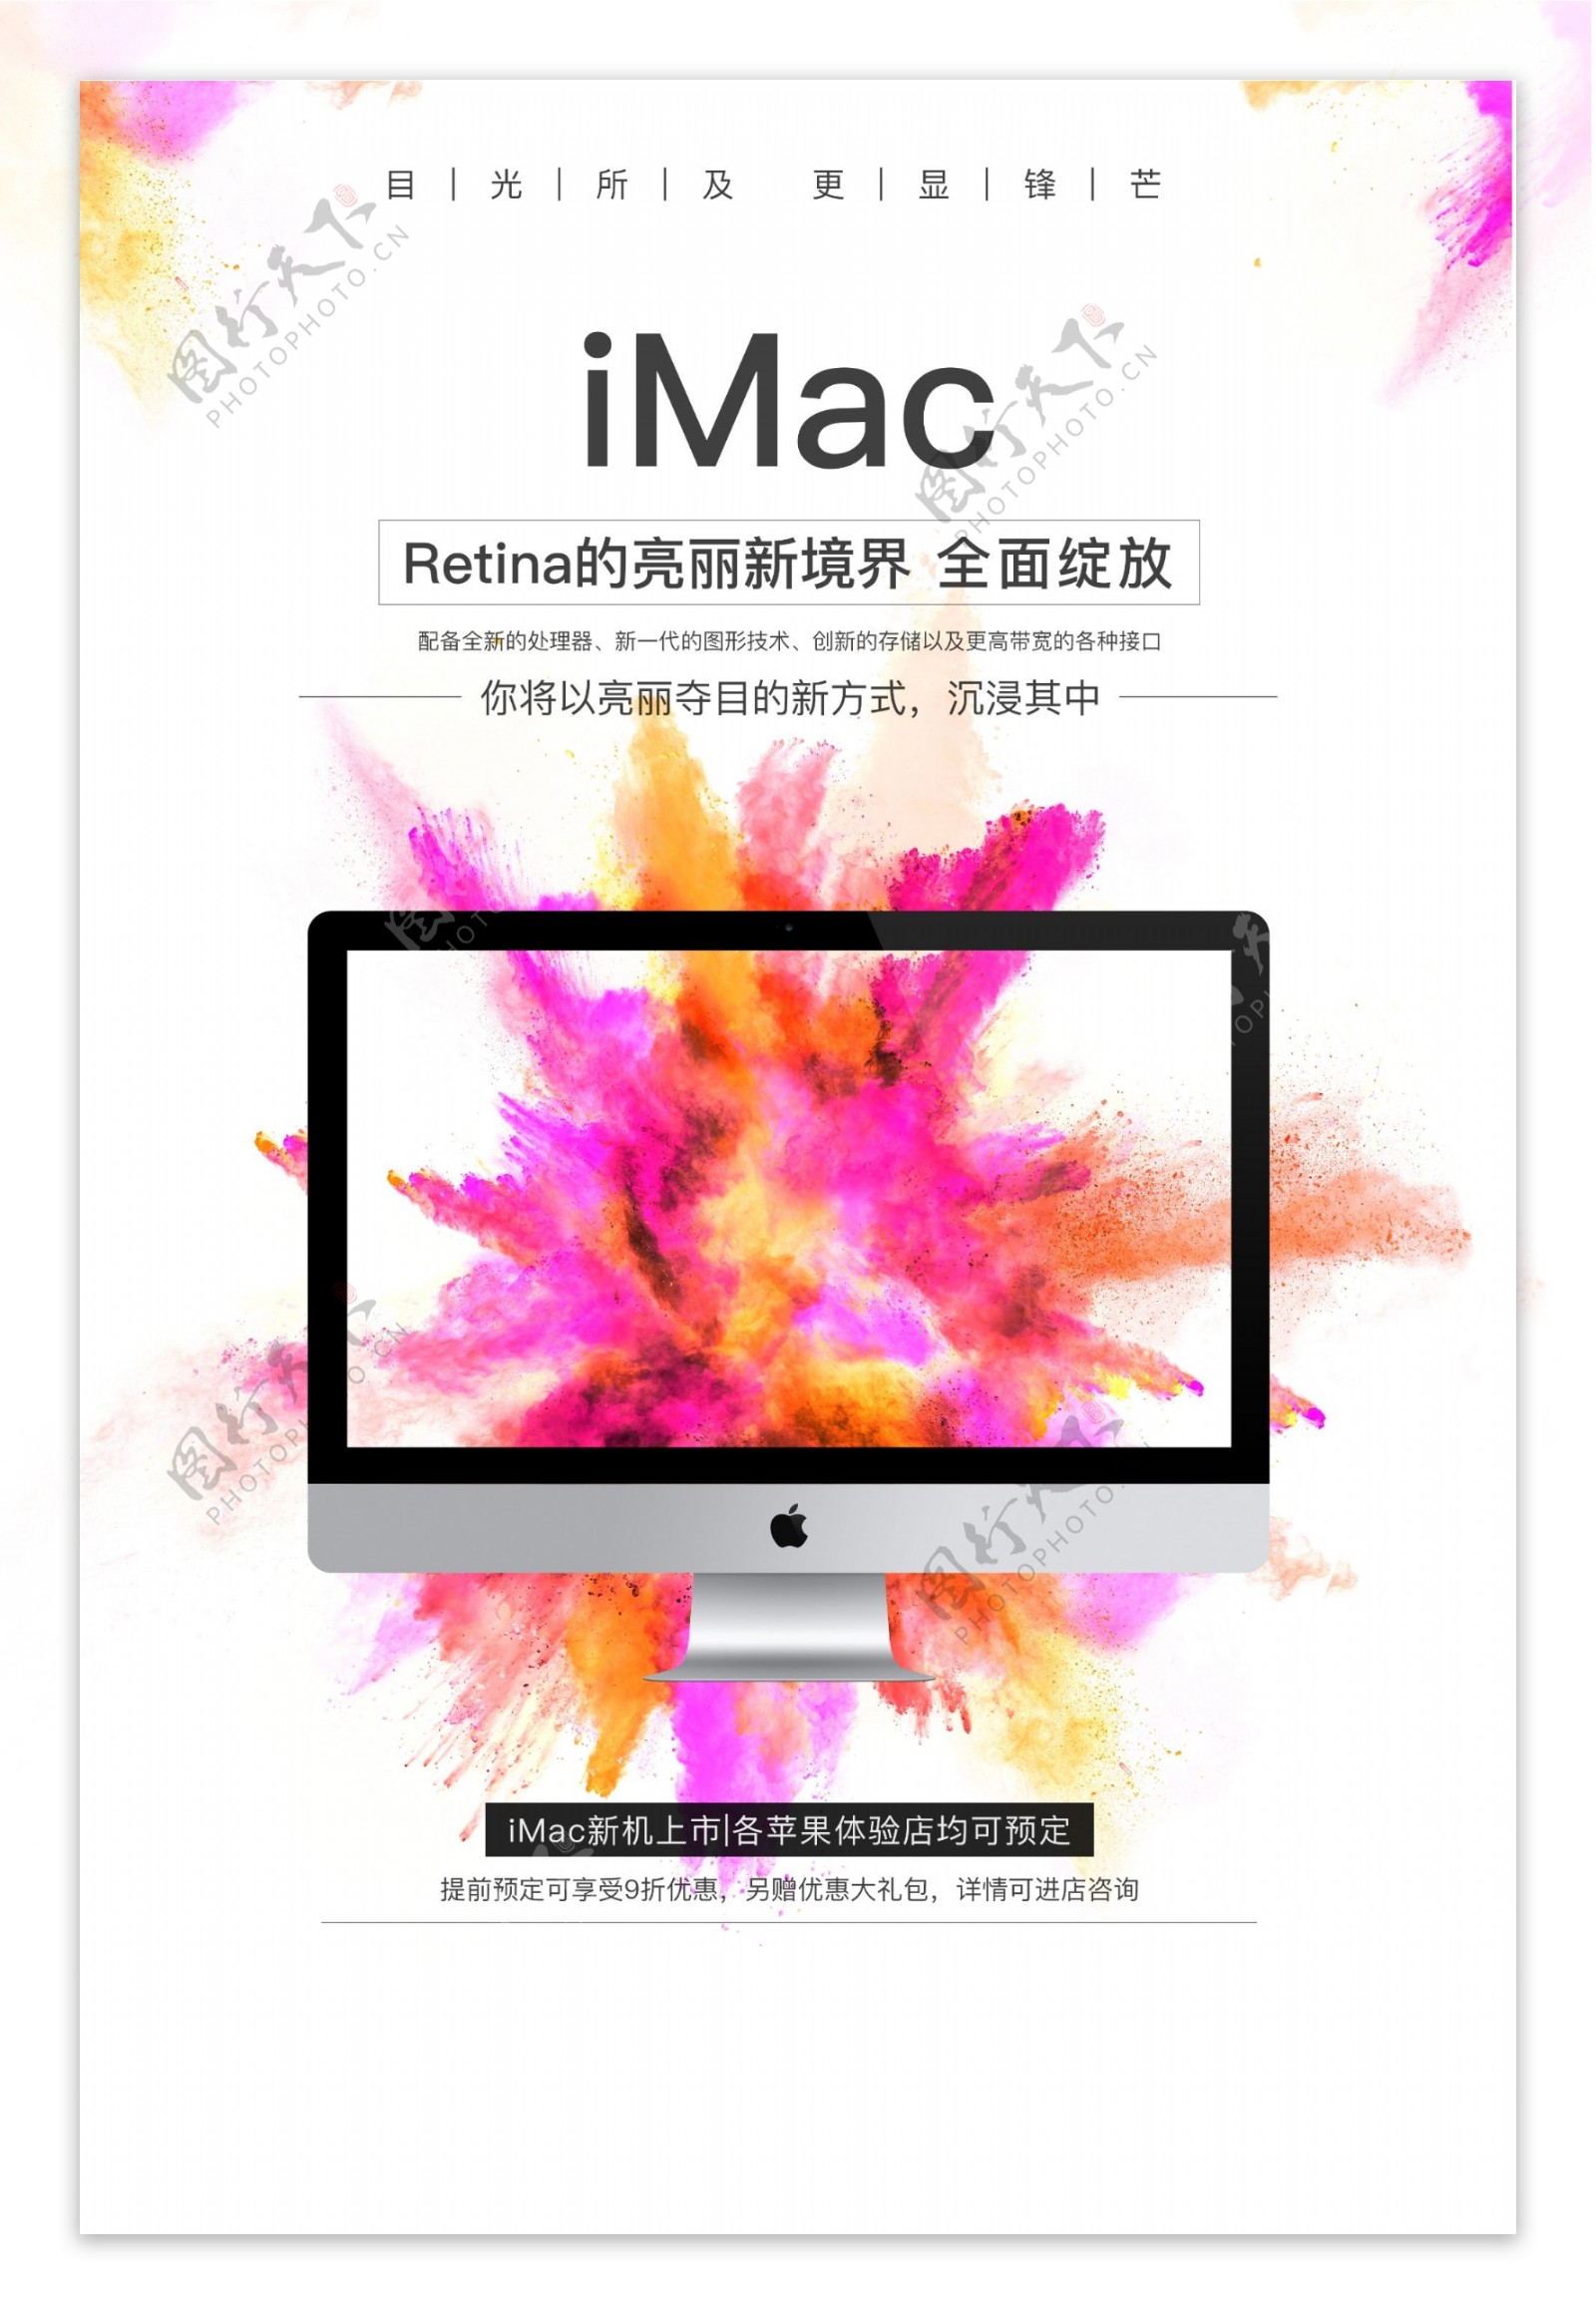 iMac海报